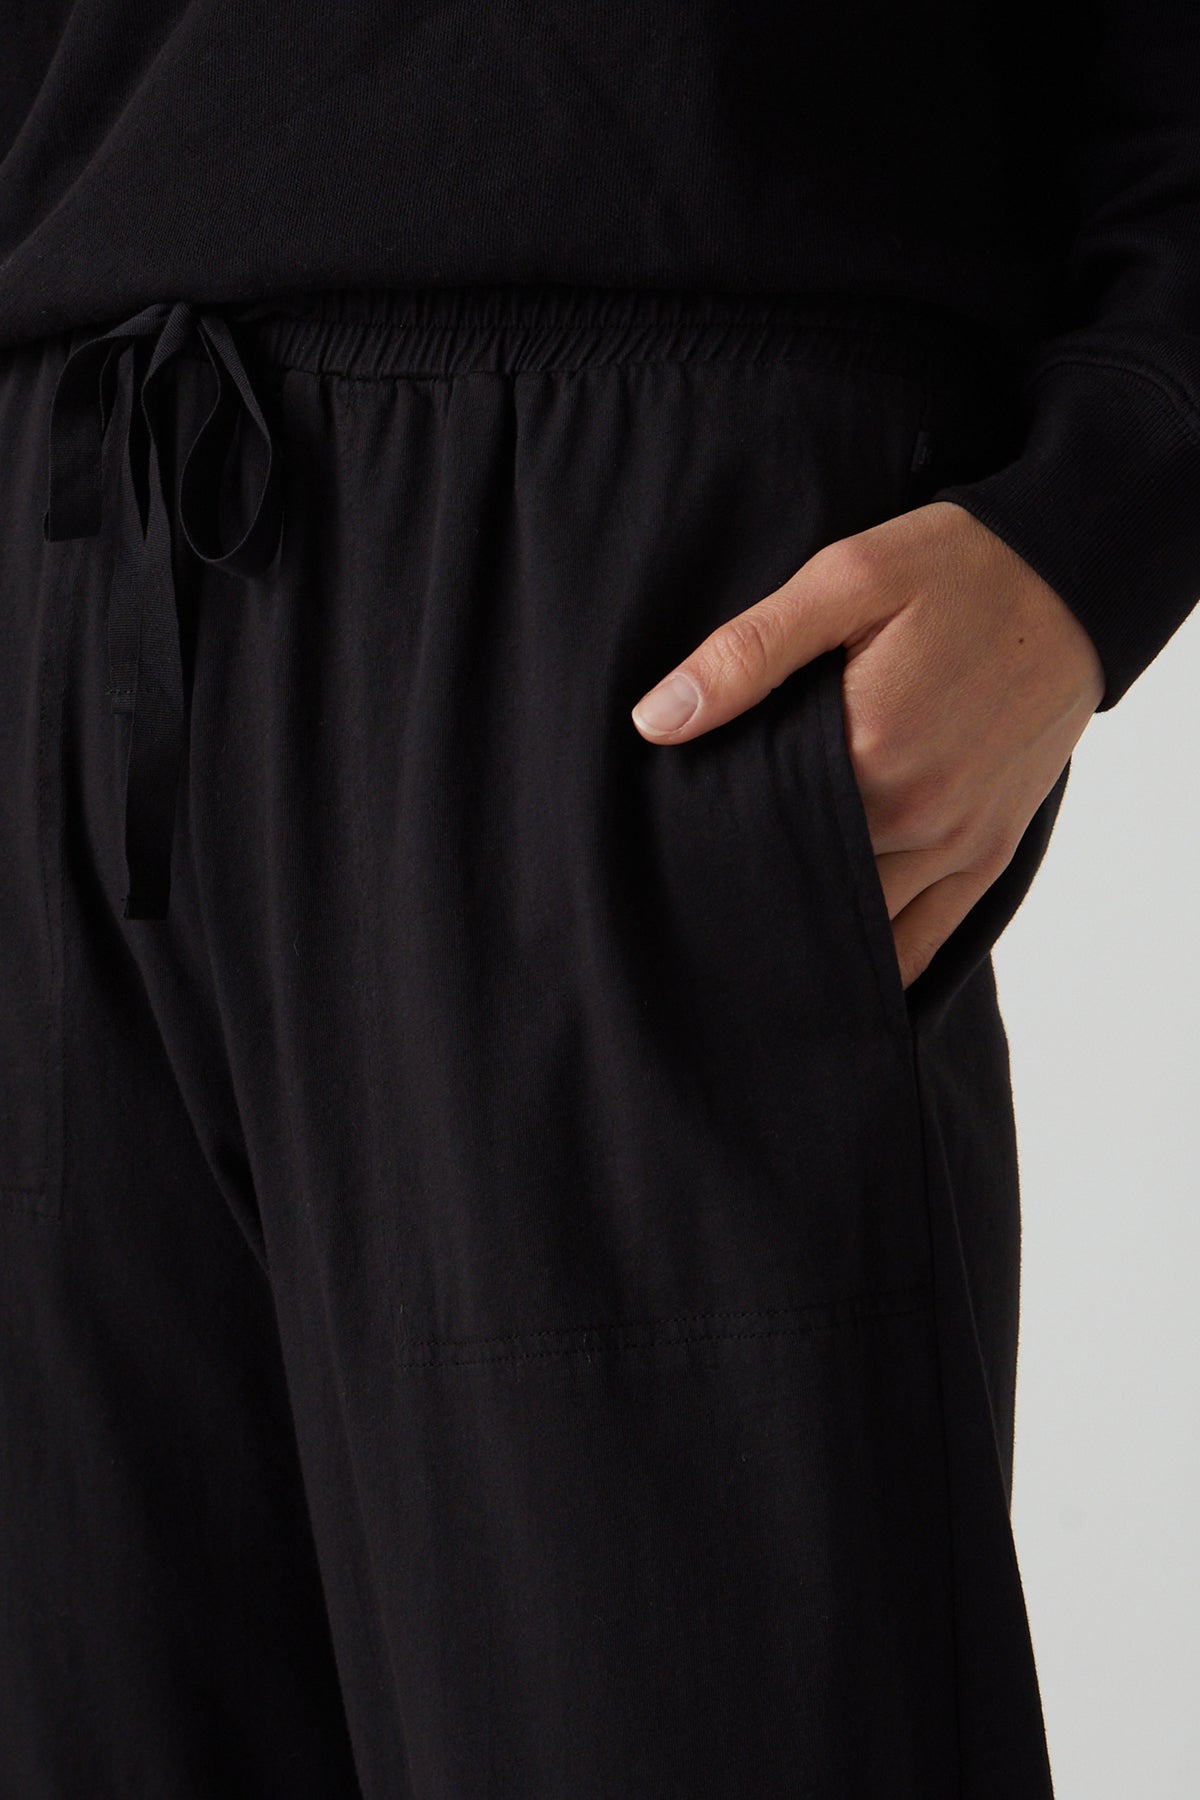 Pismo Pant in black front pocket detail-25156538794177